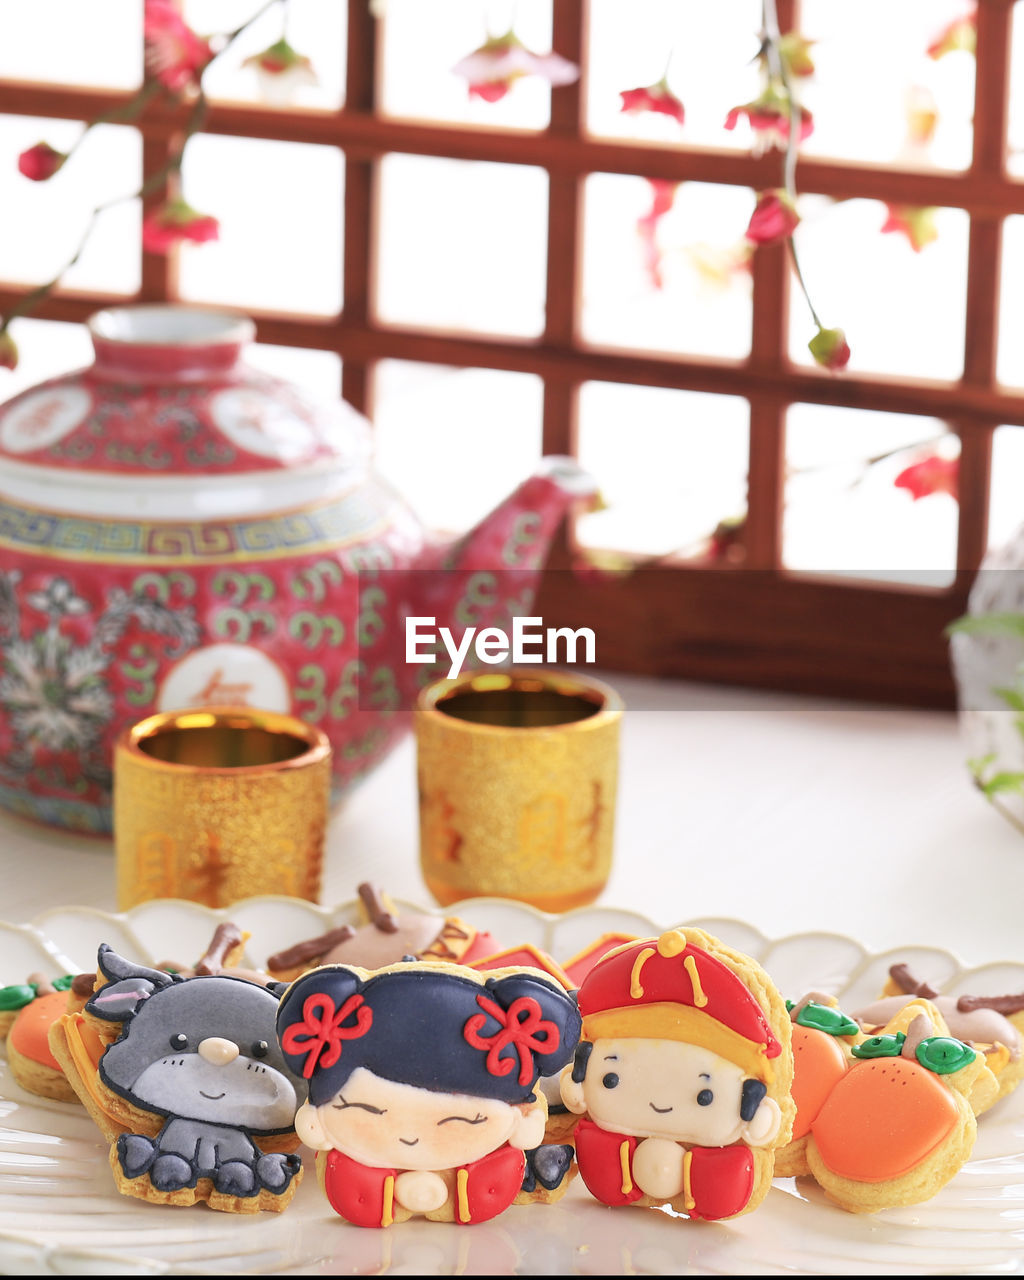 Chinese new year imlek icing sugar cookies character.